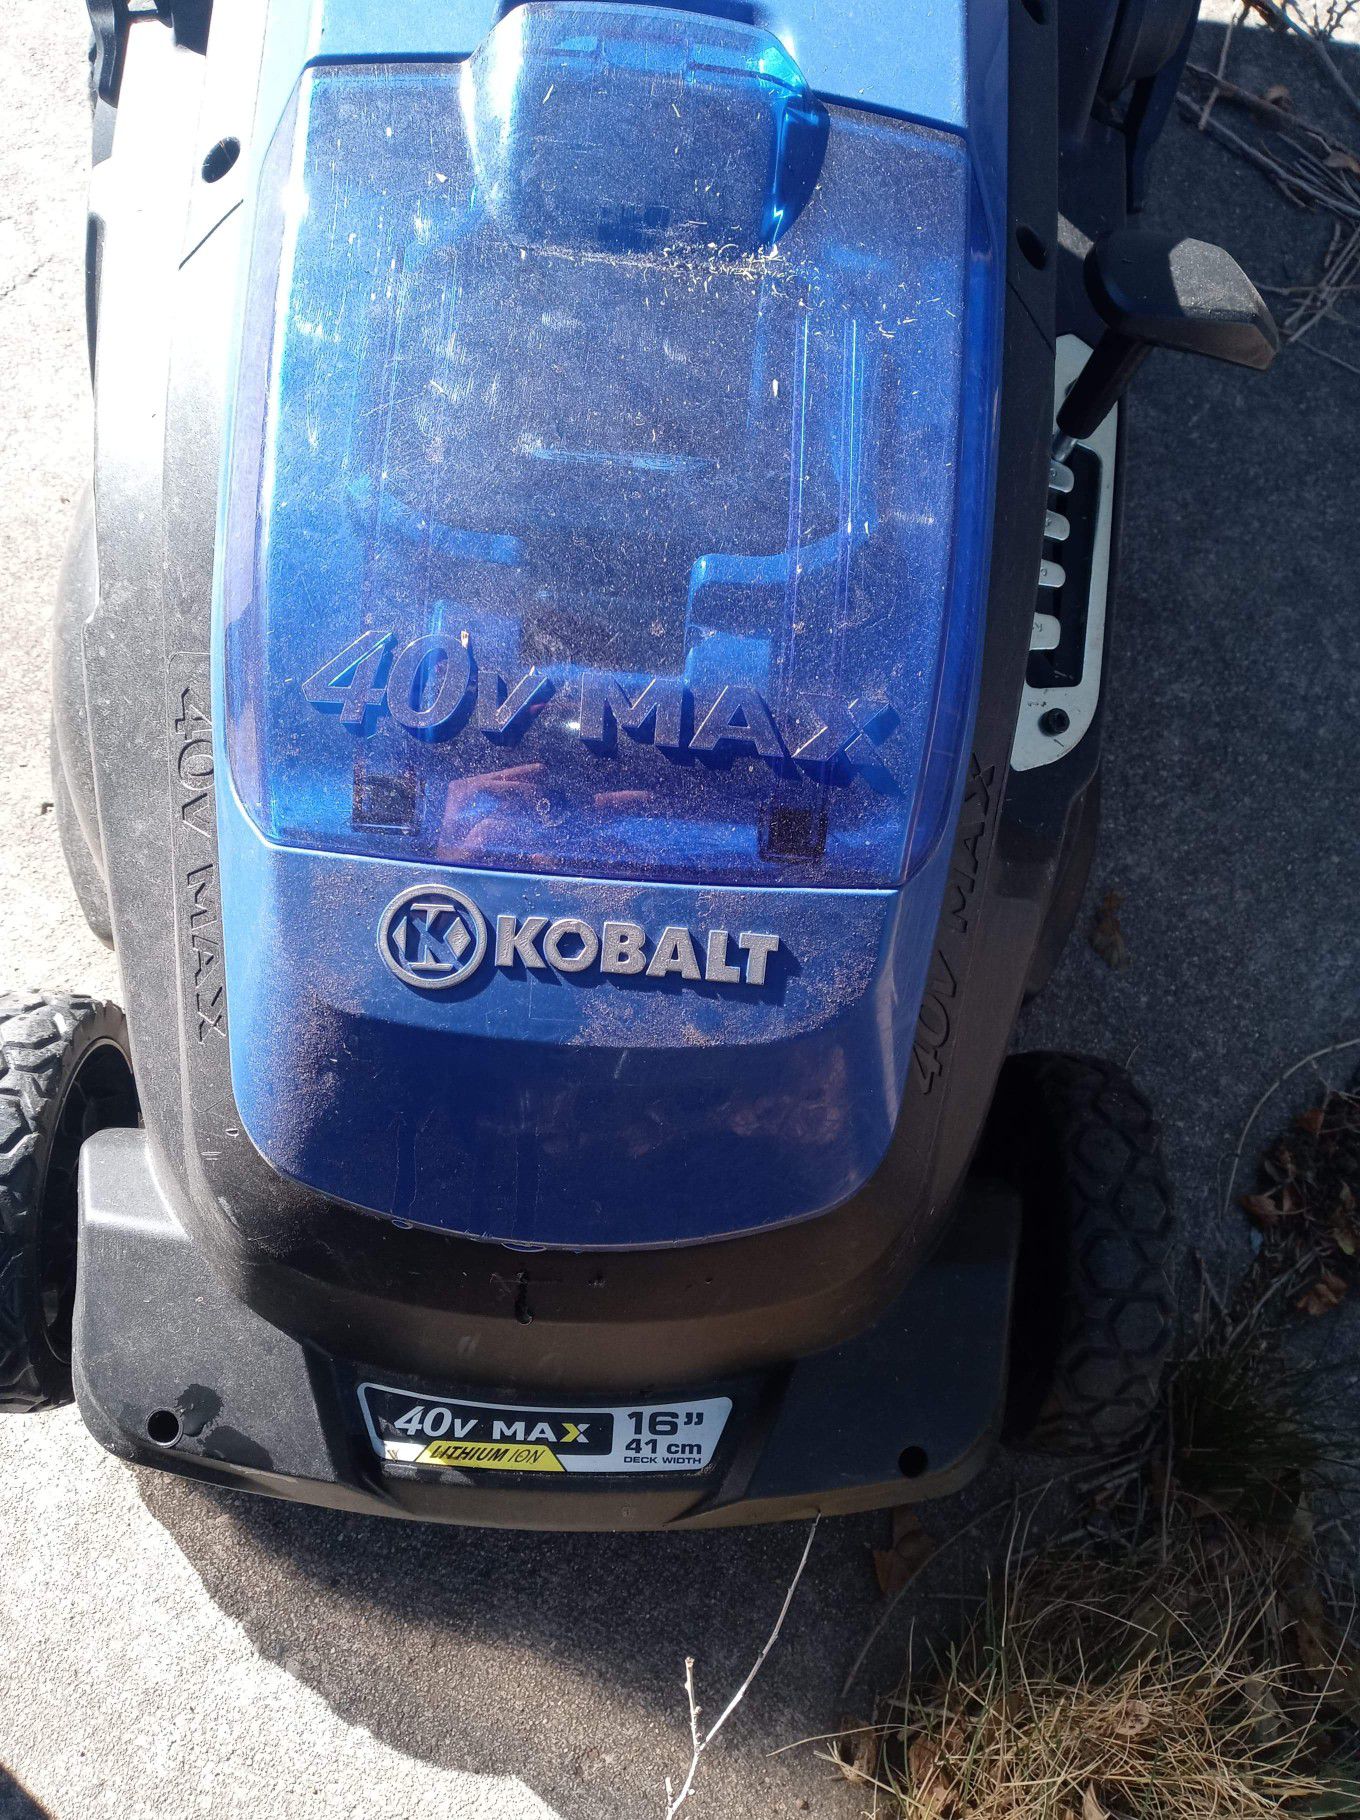 Kobalt electric lawn mower